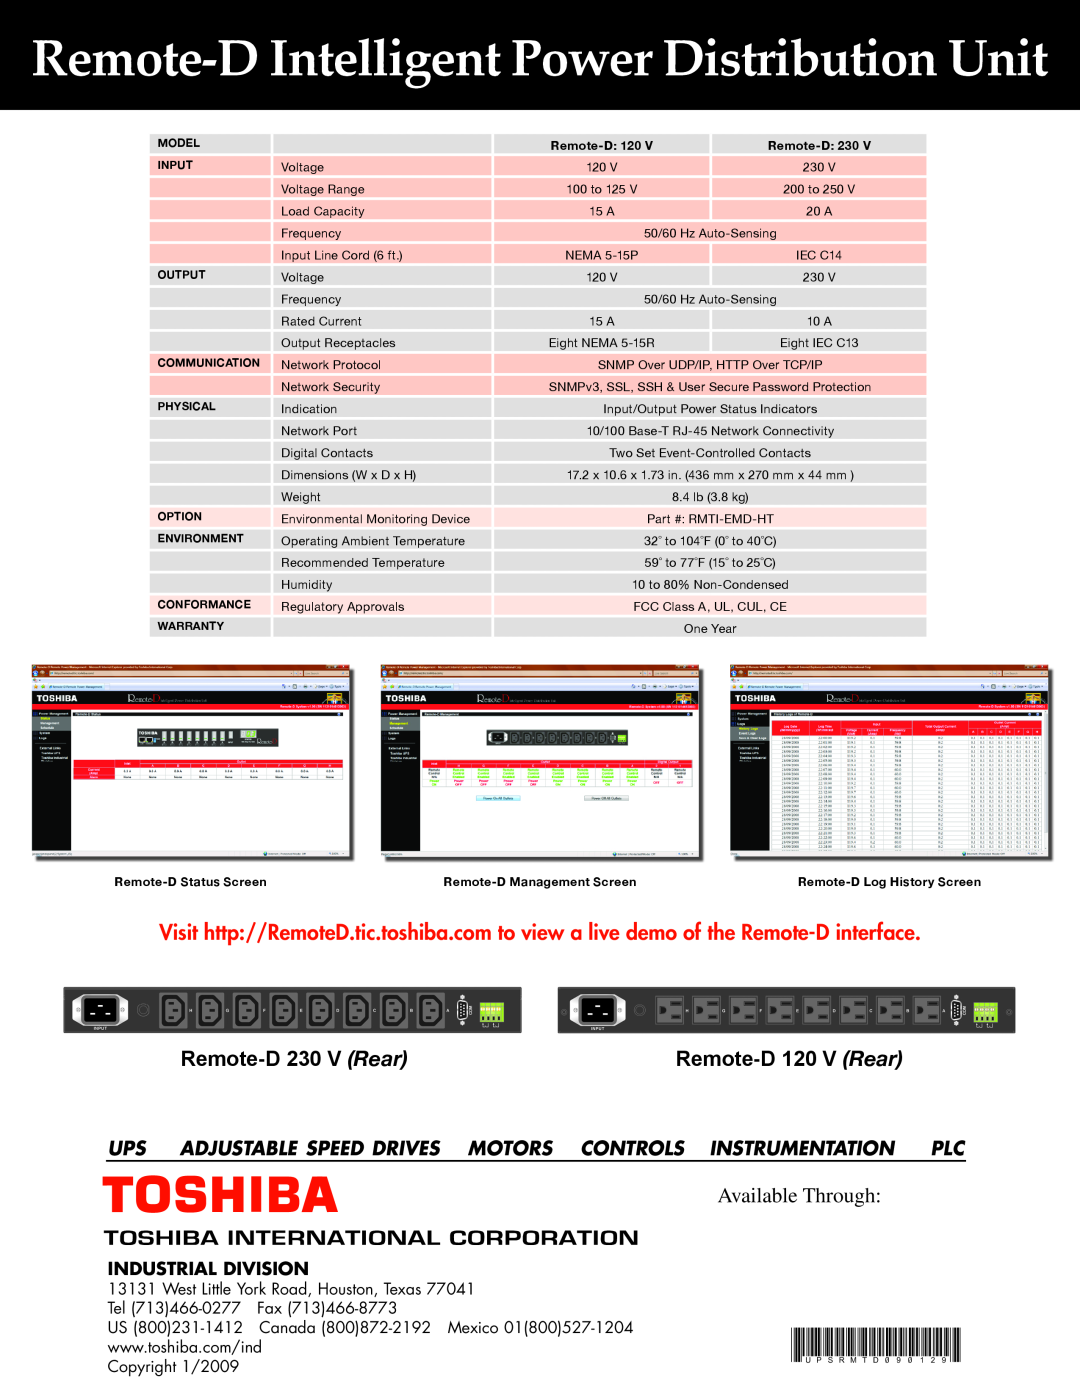 Toshiba REMOTE-D Remote-D Intelligent Power Distribution Unit, Remote-D 230 V Rear, Remote-D 120 V Rear, Available Through 